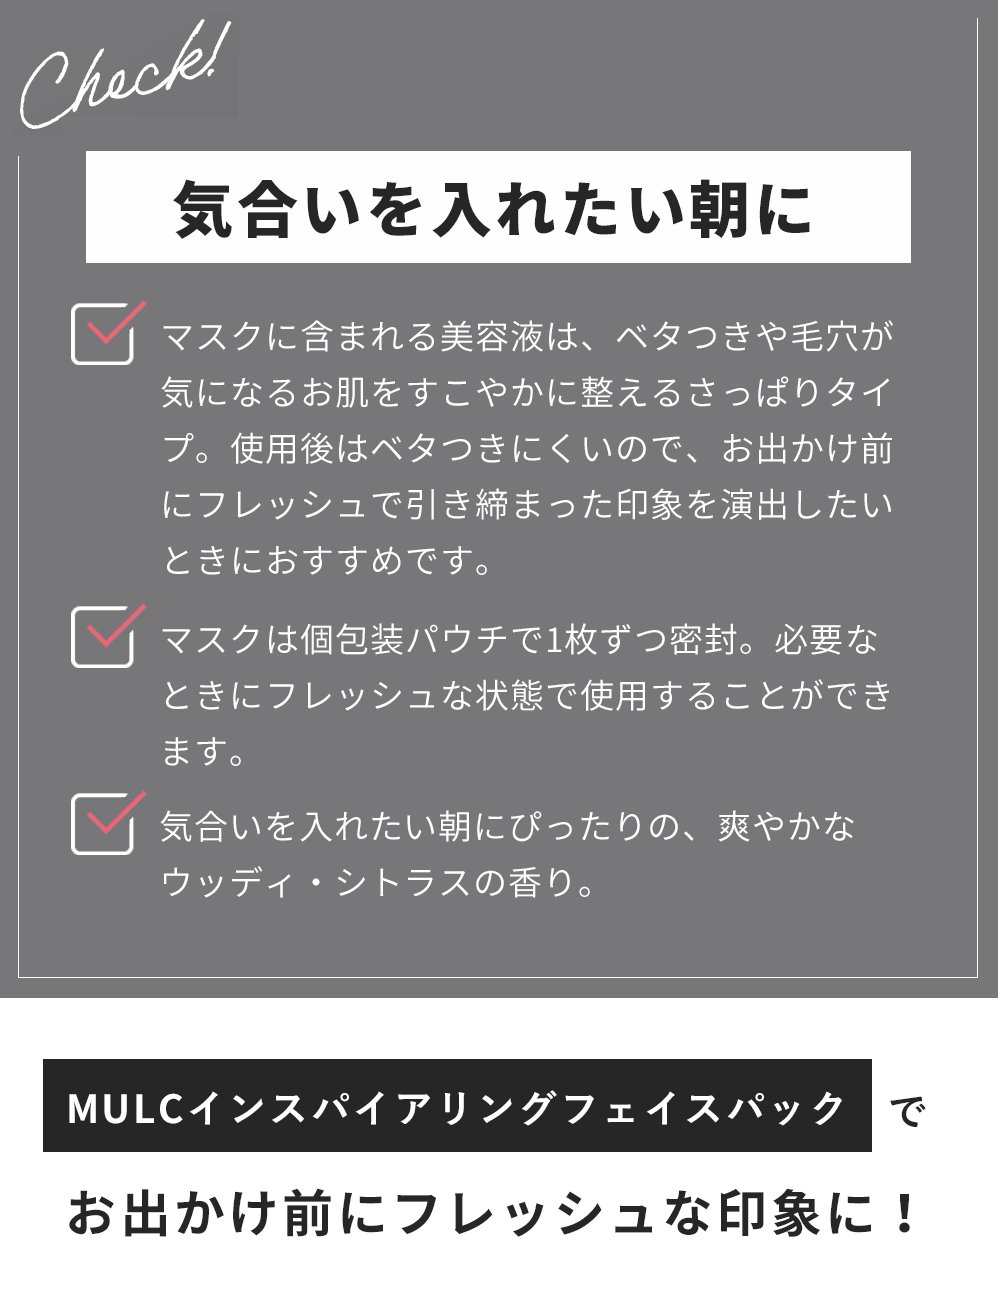 MULC インスパイアリングフェイスパック5枚セット - MULCオンラインショップ